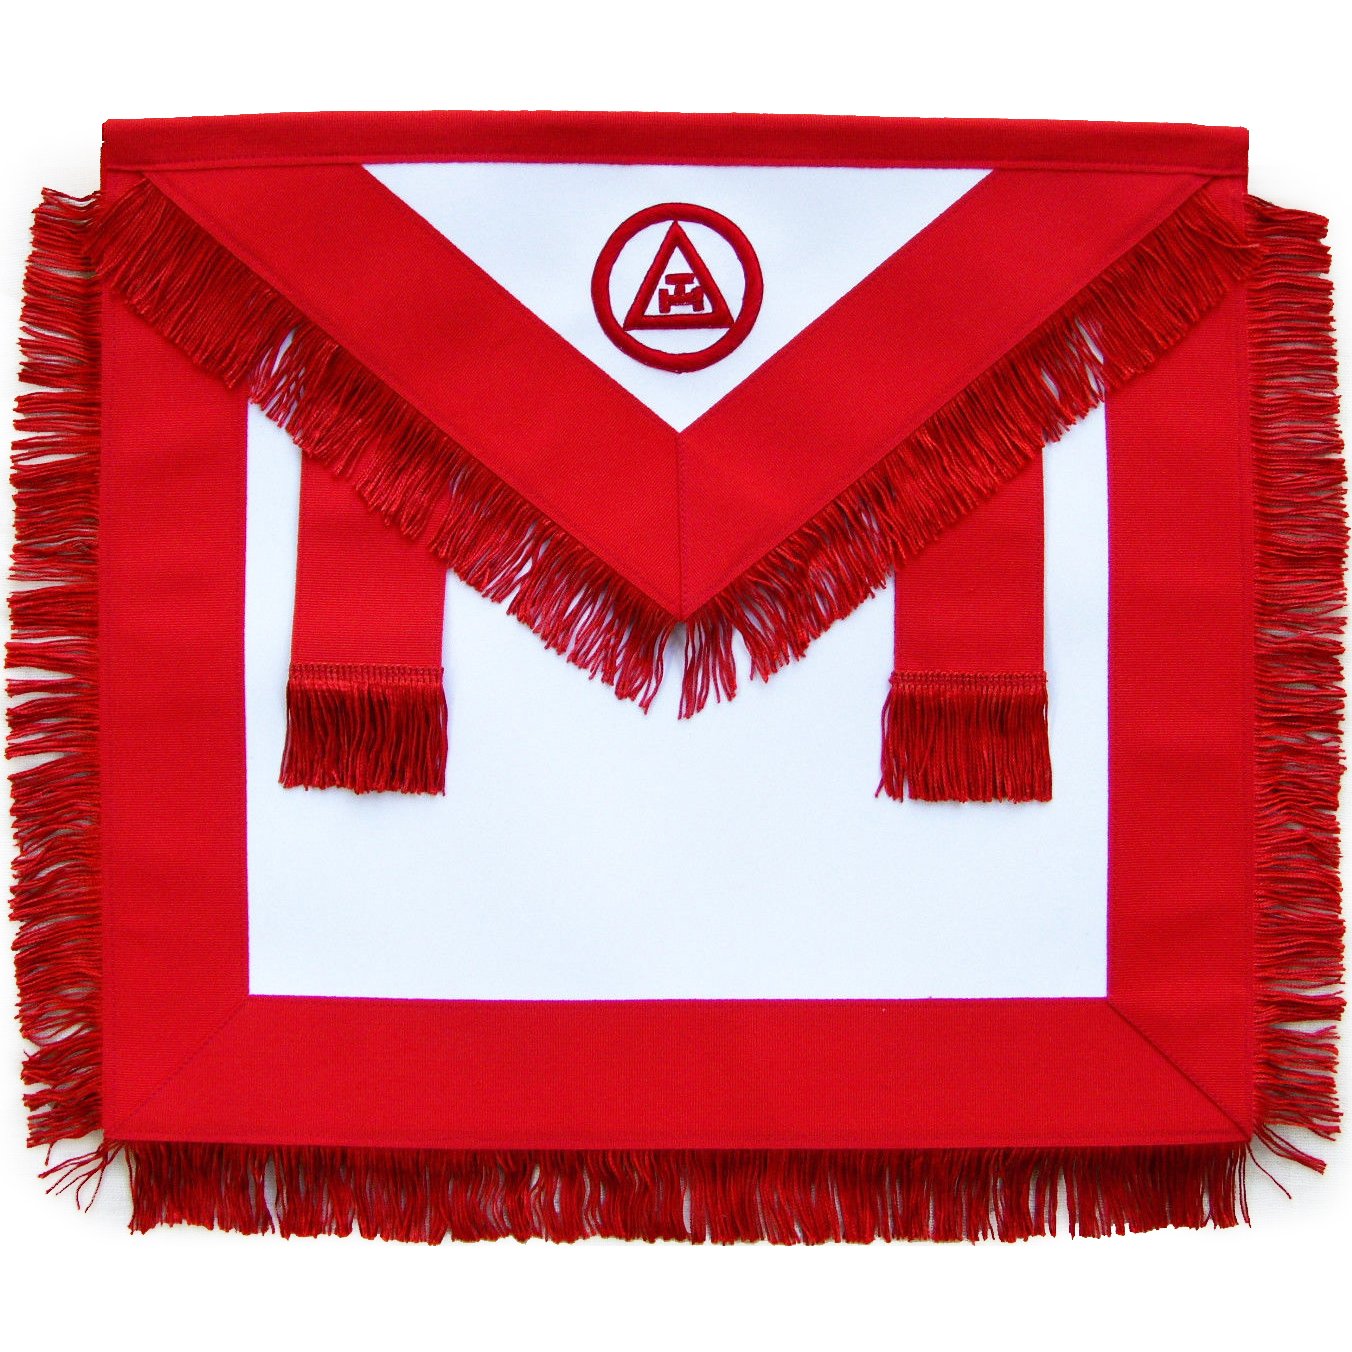 Royal Arch Member Chapter Apron - Red Triple Tau with Fringe Tassels - Bricks Masons